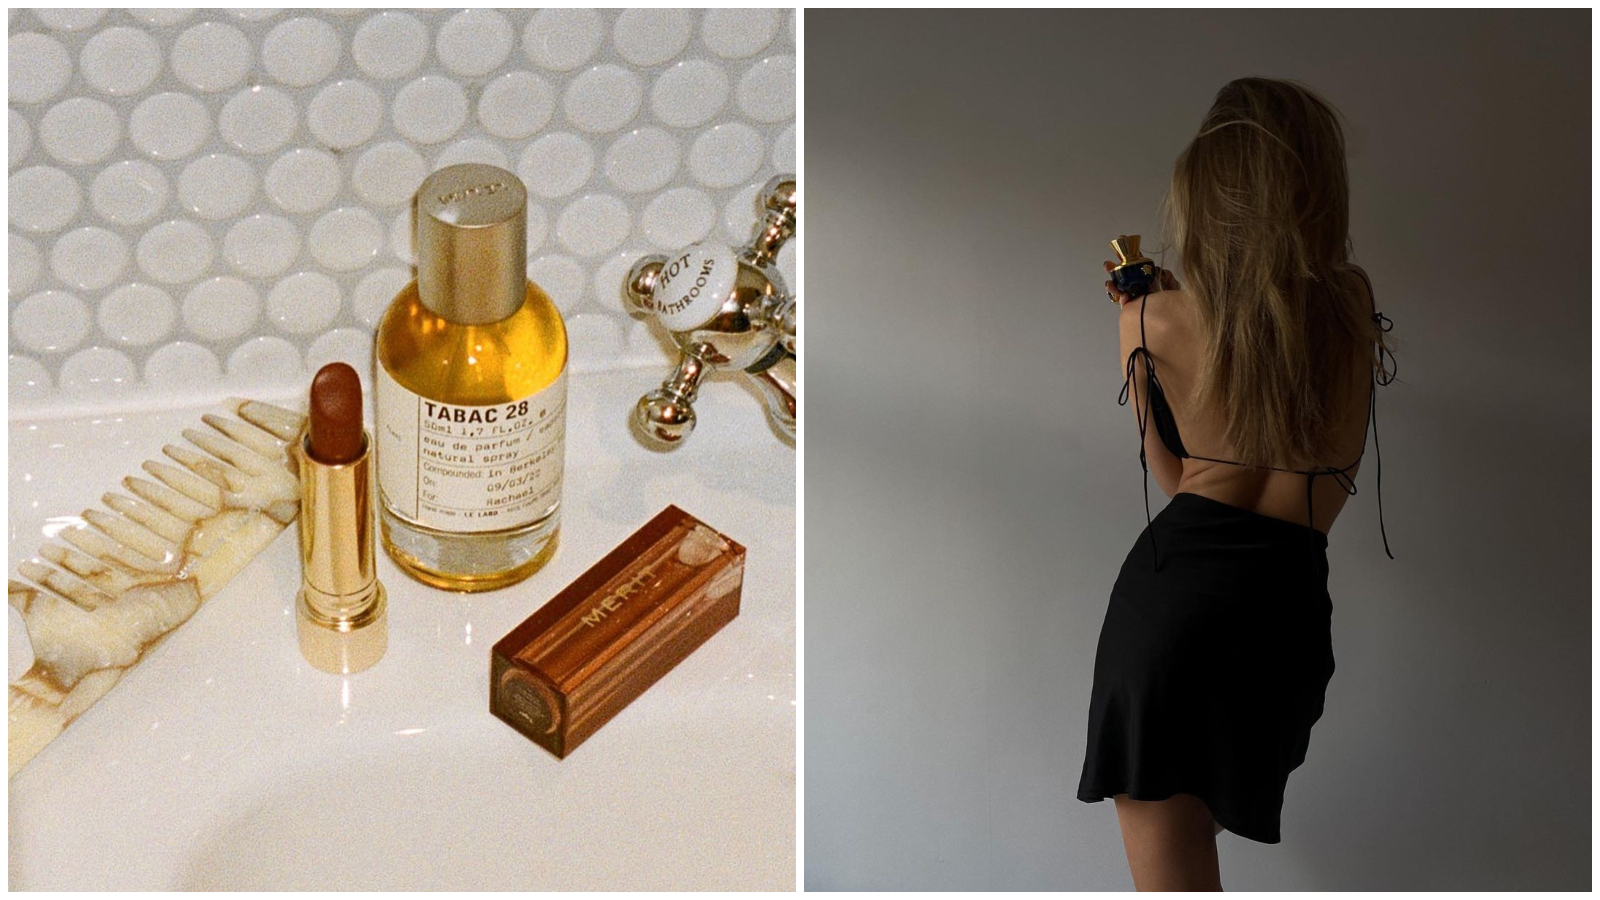 Znate li koja je zapravo razlika između Eau de Toilette i Eau de Parfum mirisa?